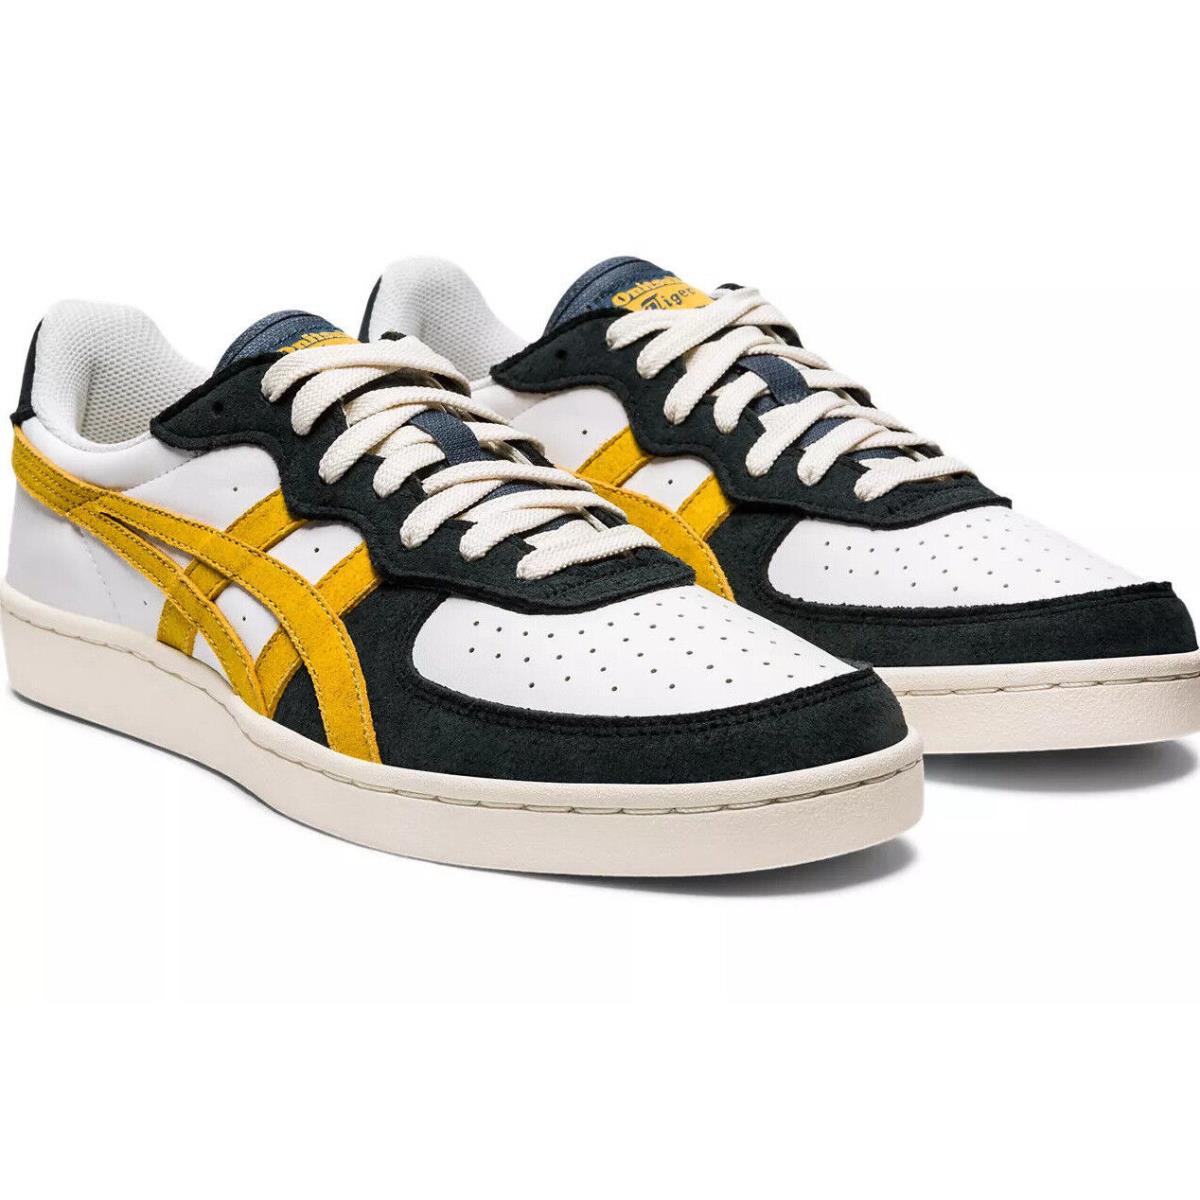 11.5 Asics Onitsuka Tiger Gsm White/tiger Yellow Sneakers 1183A702.100 SZ 11.5